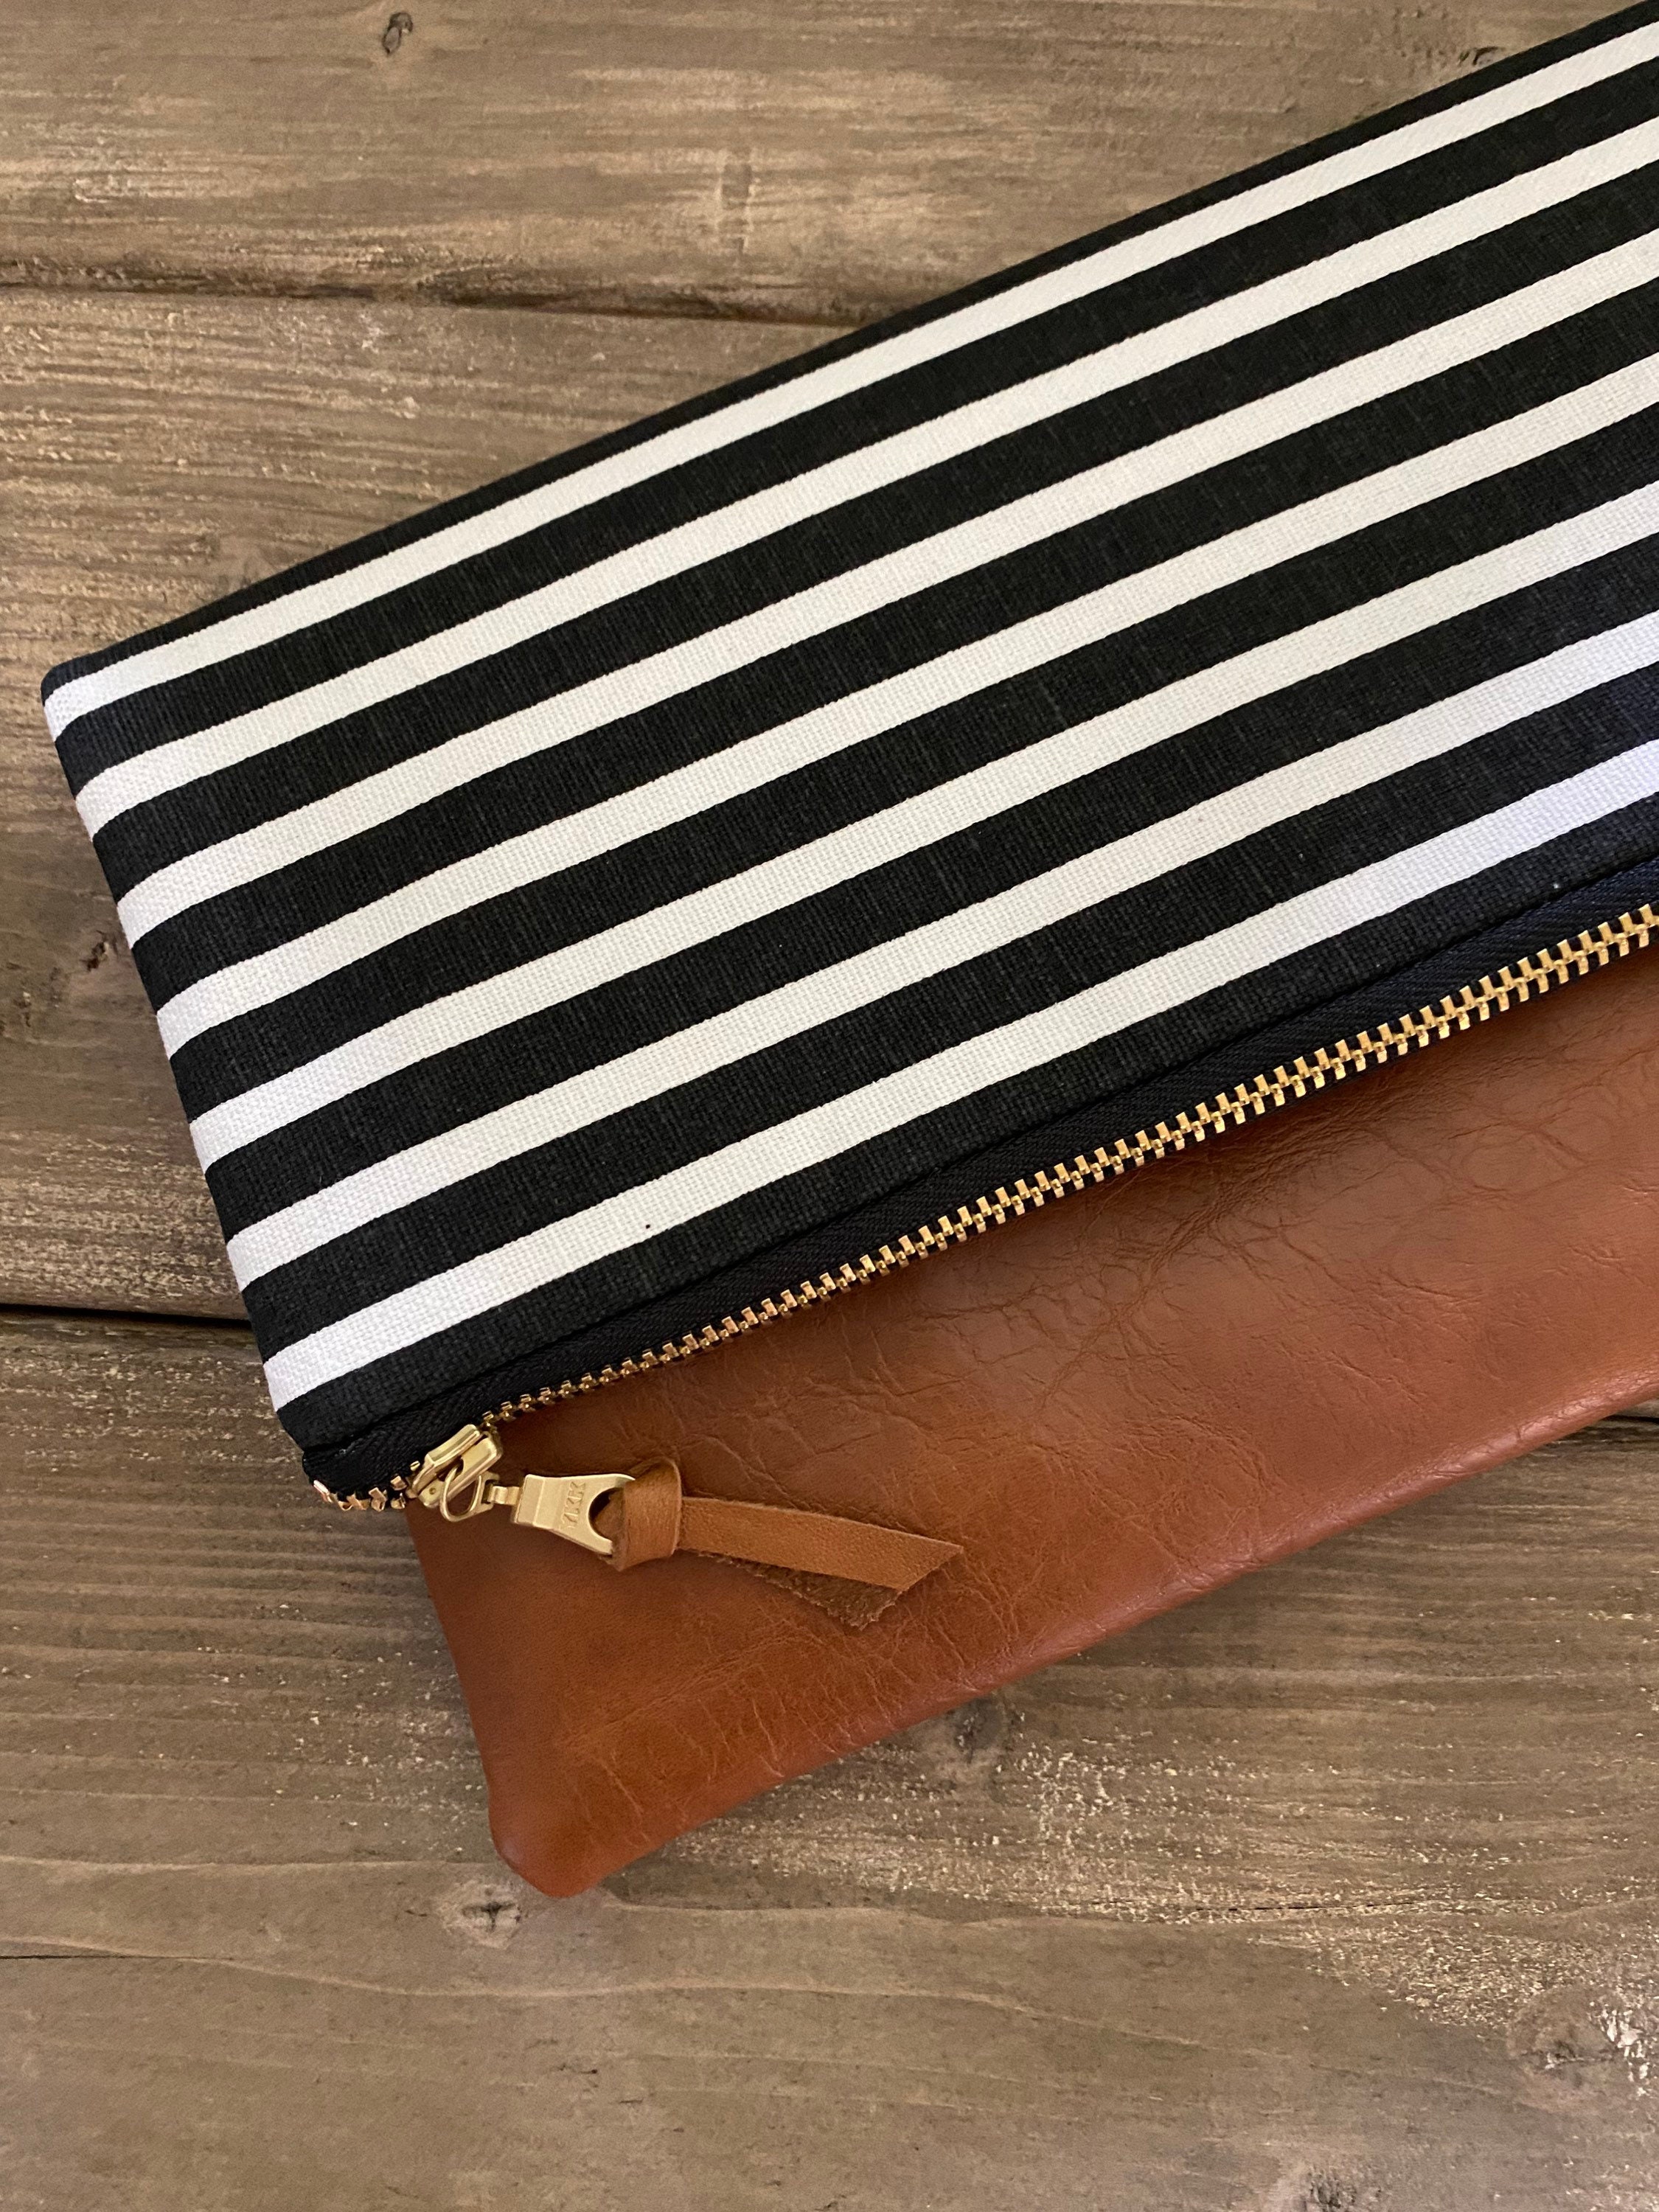 wallet simple clutch purse